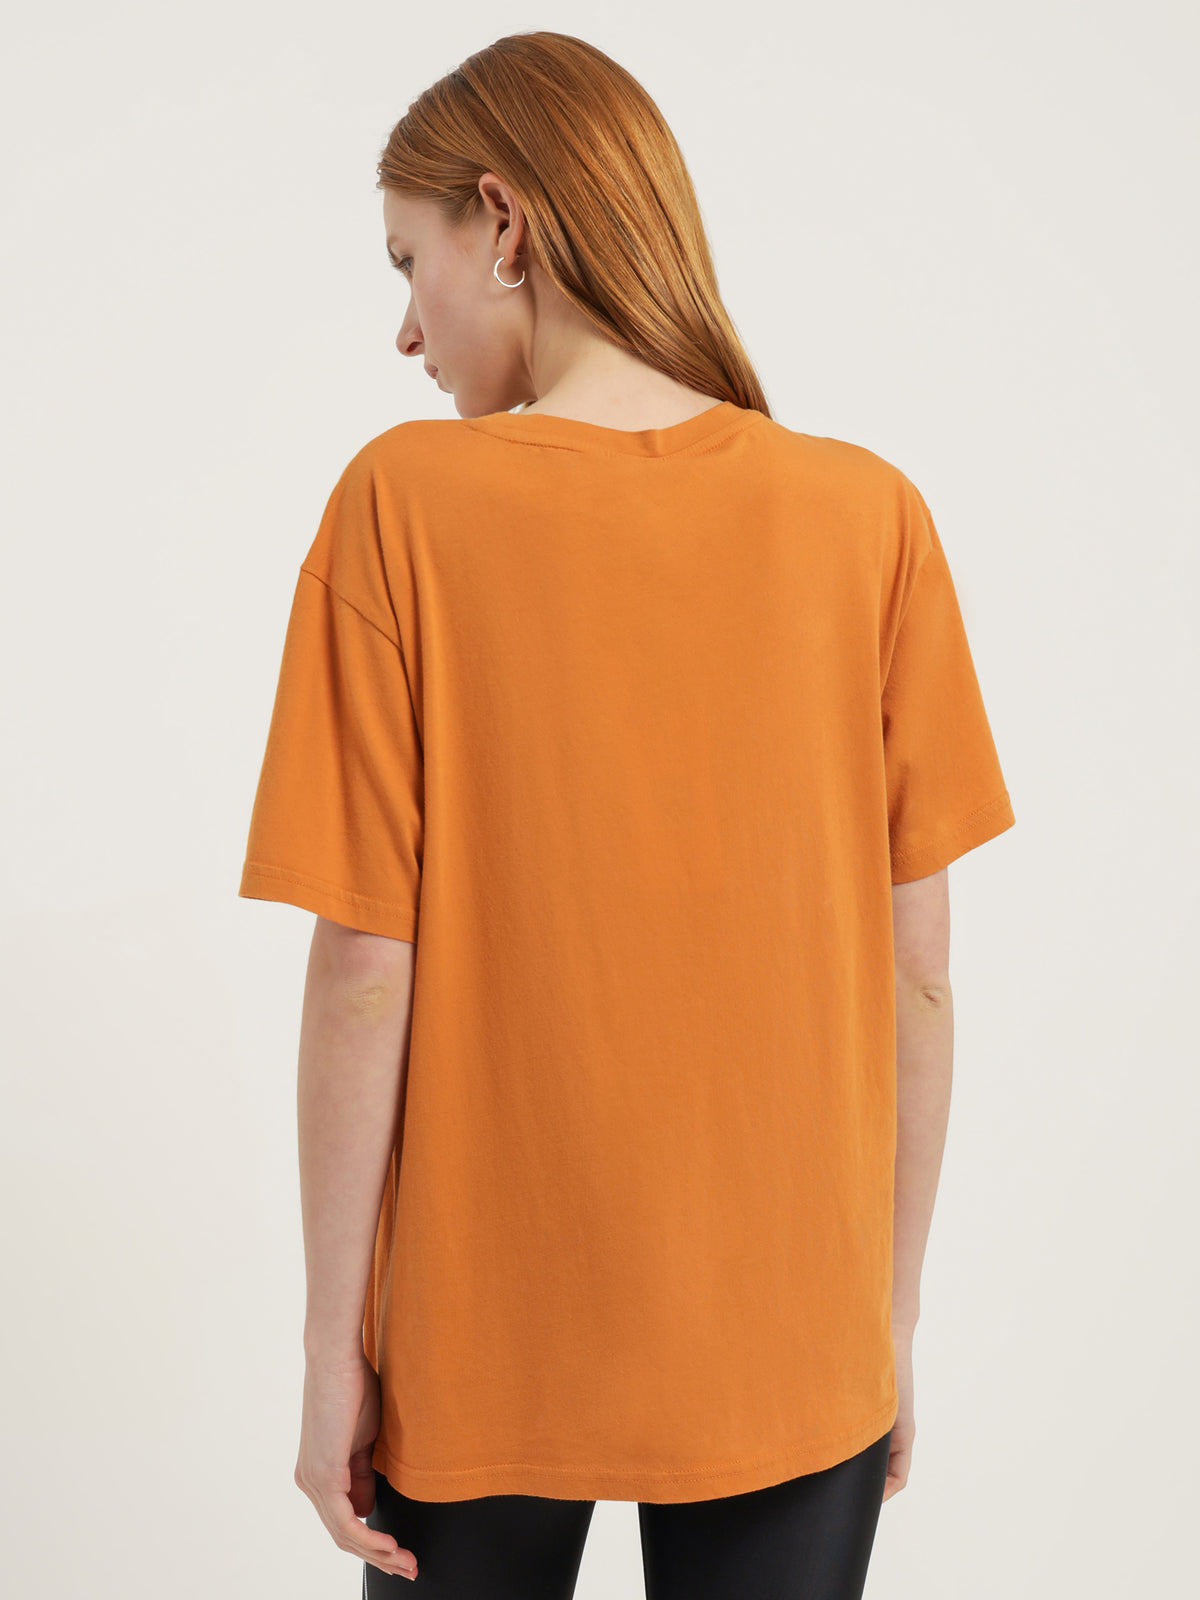 Heads Up T-Shirt in Golden Oak Orange